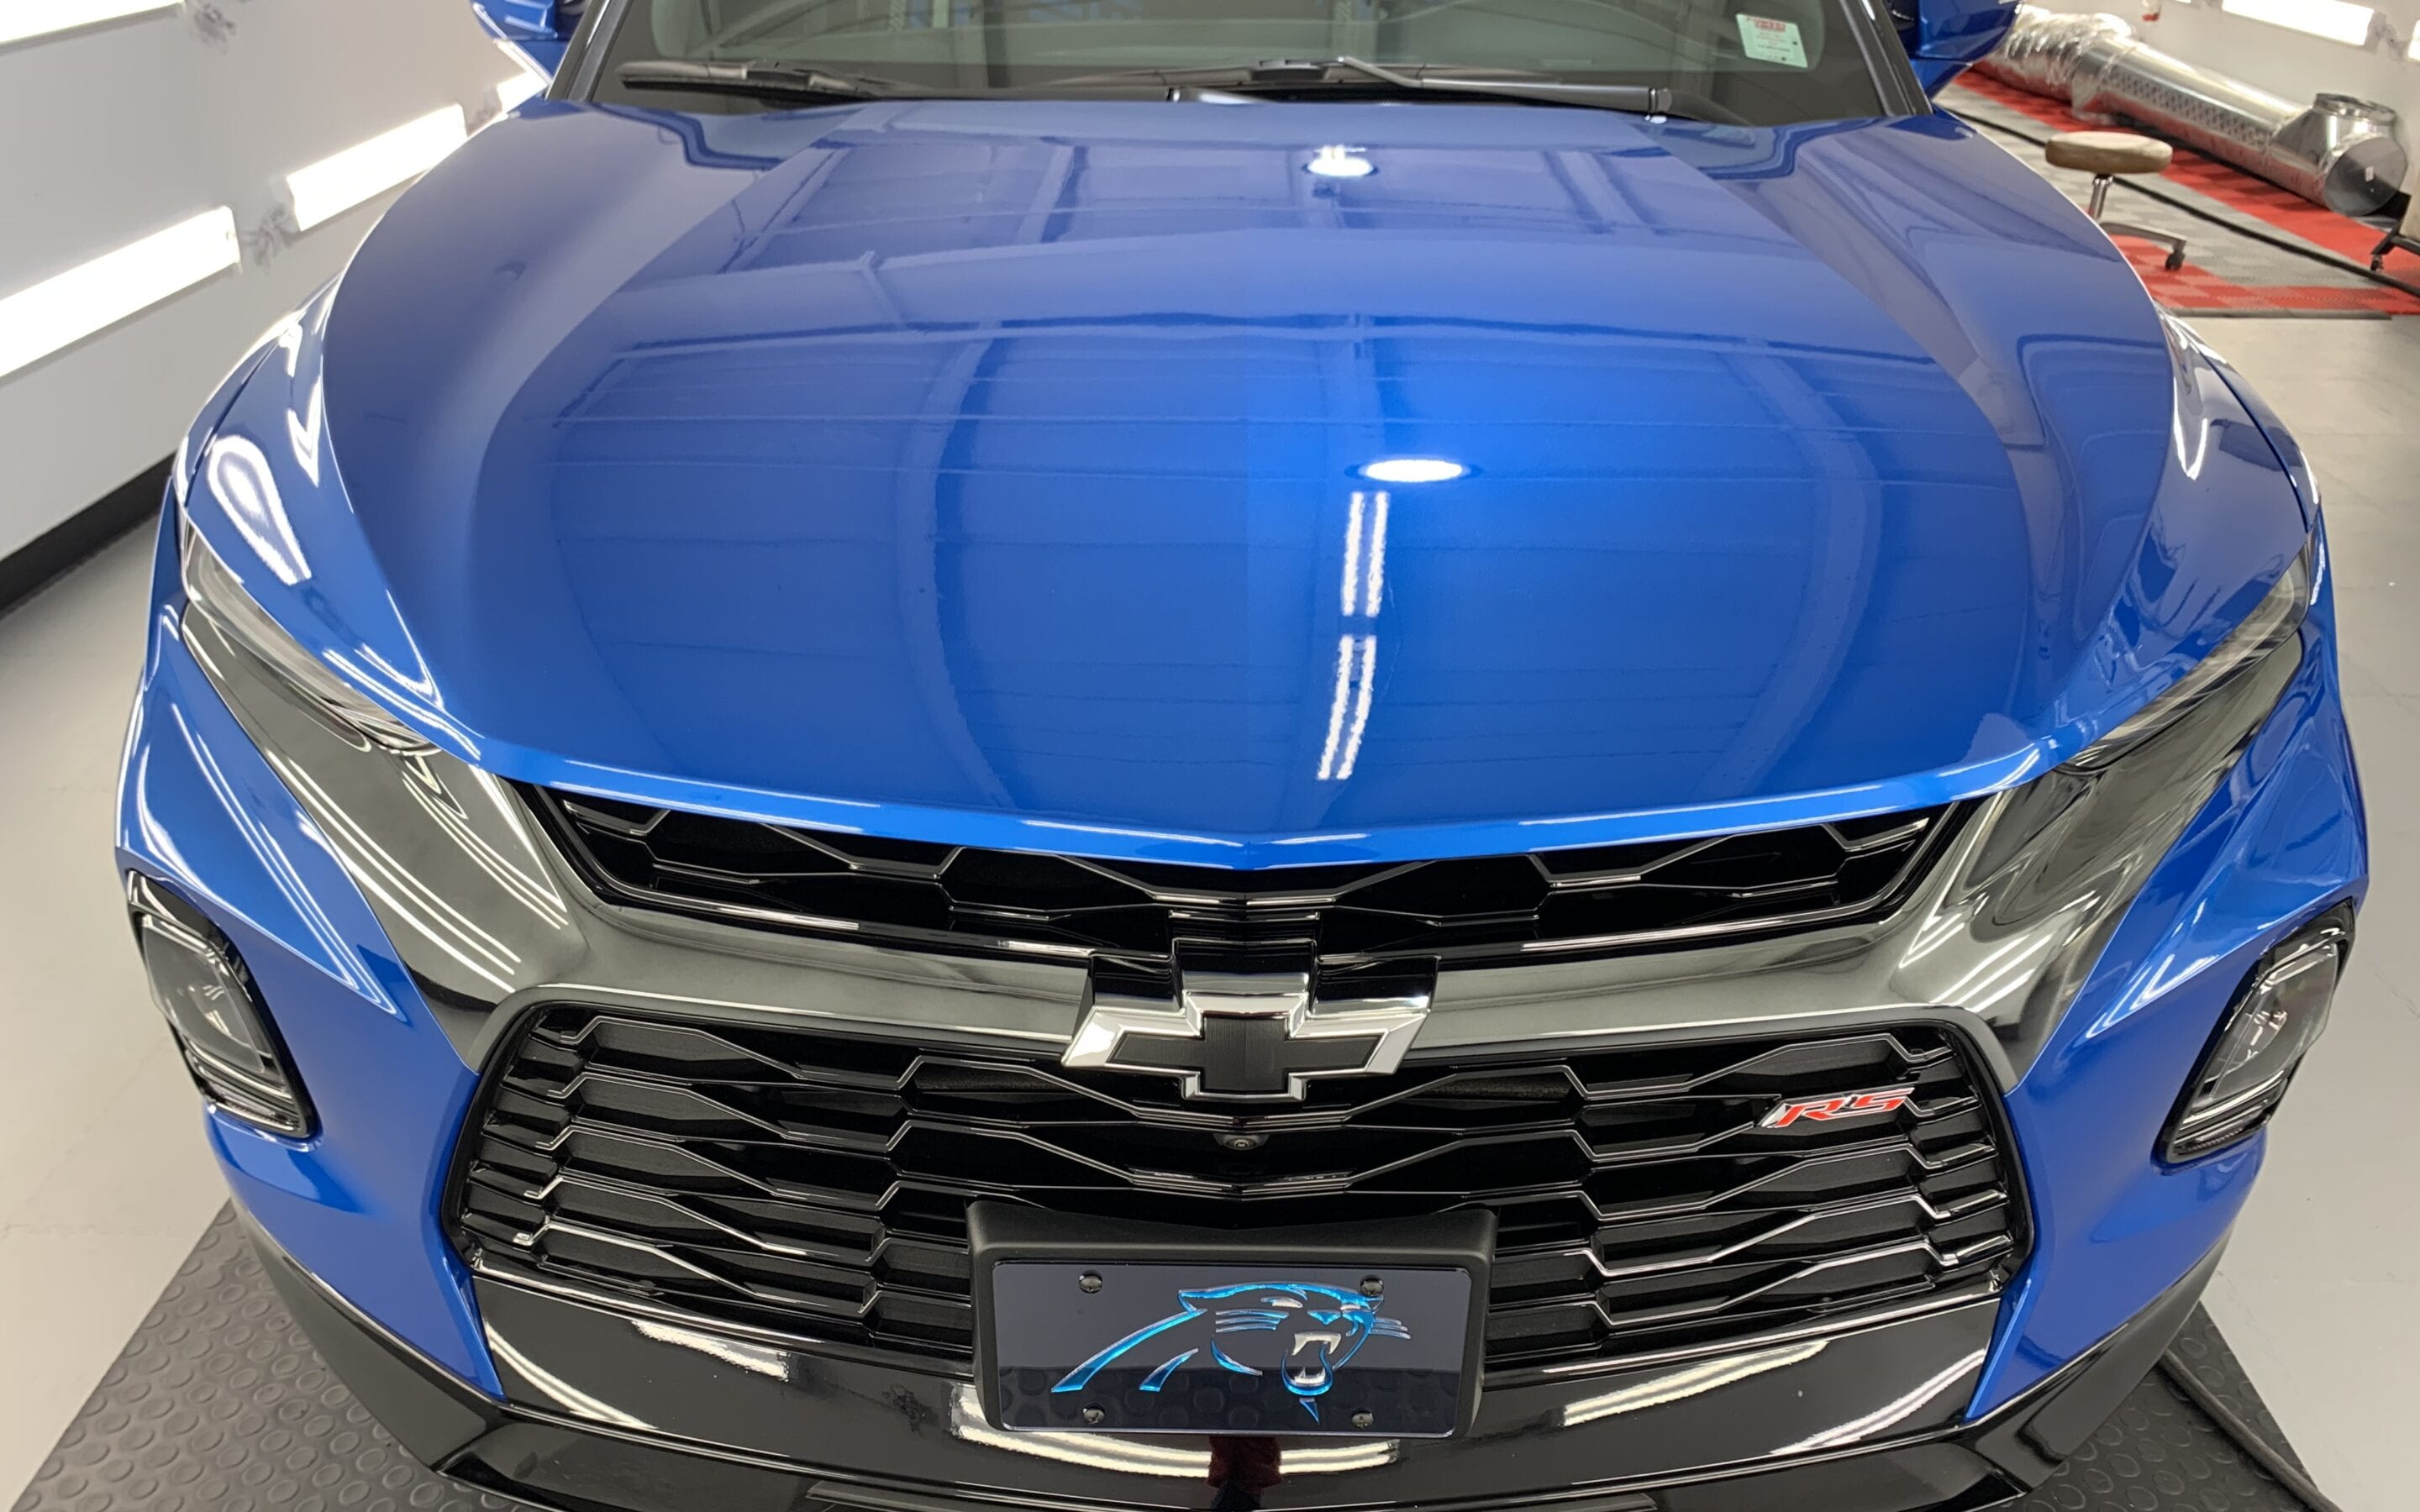 Photo of a New Car Preparation of a 2021 Chevrolet Blazer